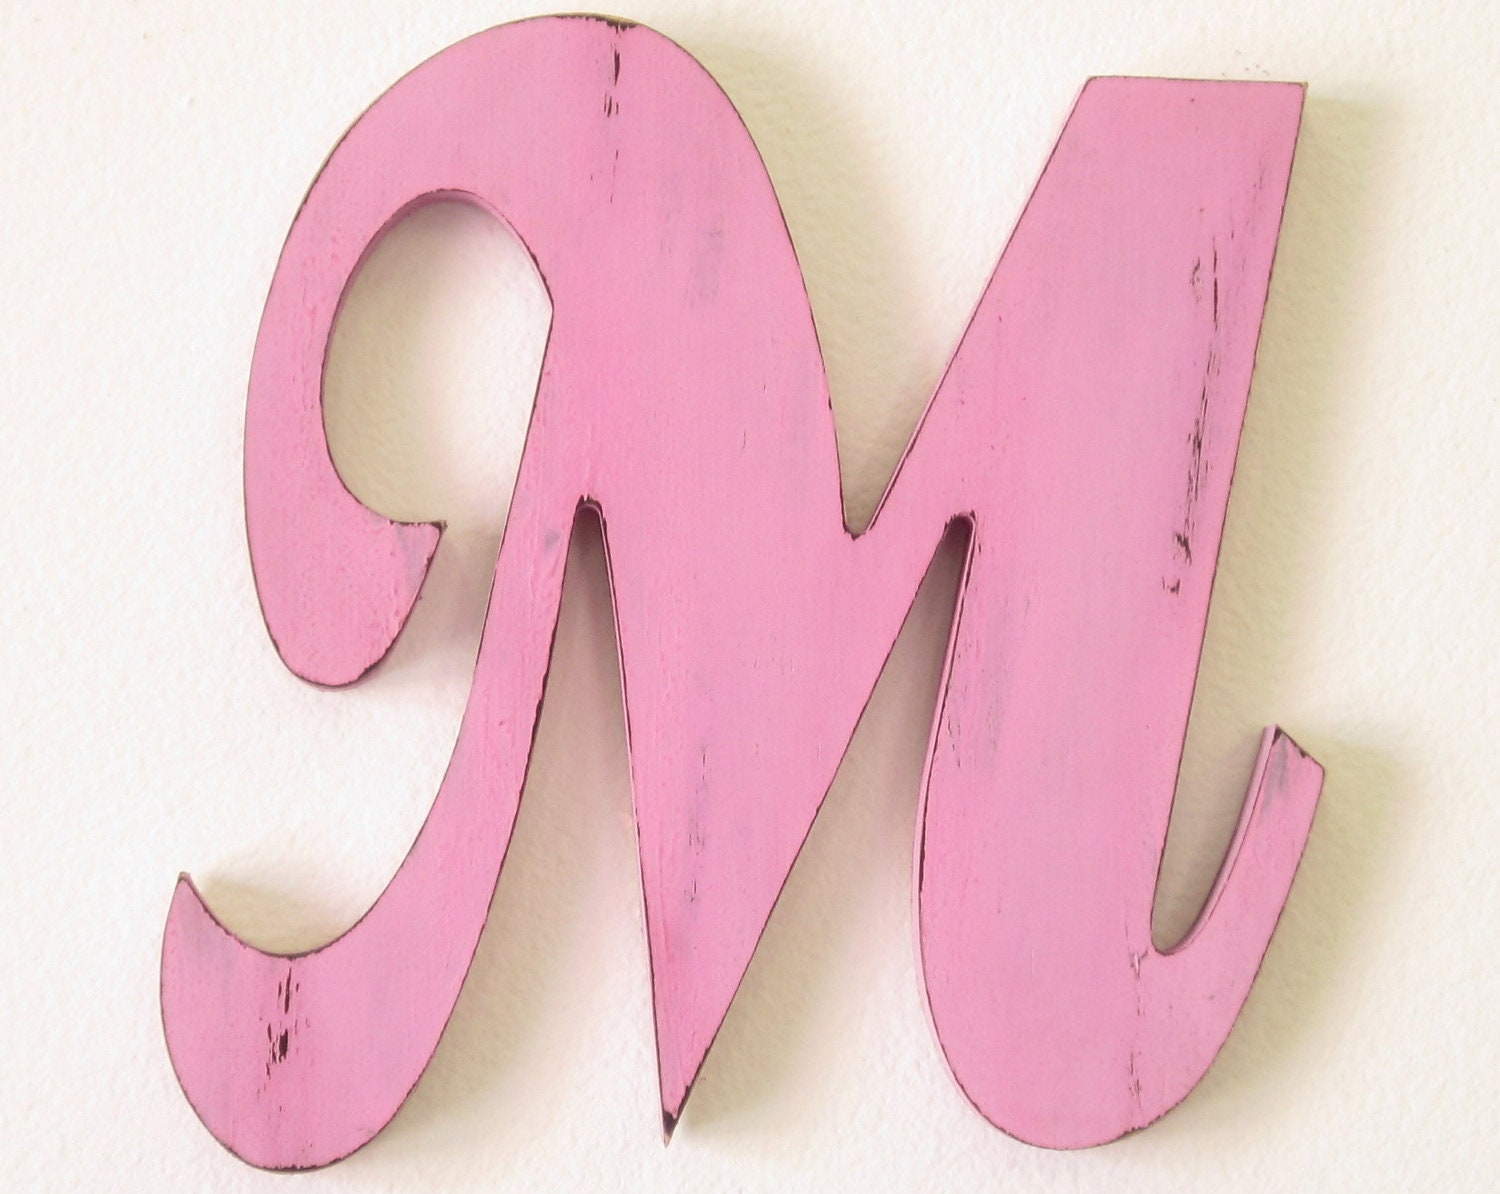 Letter M Pink